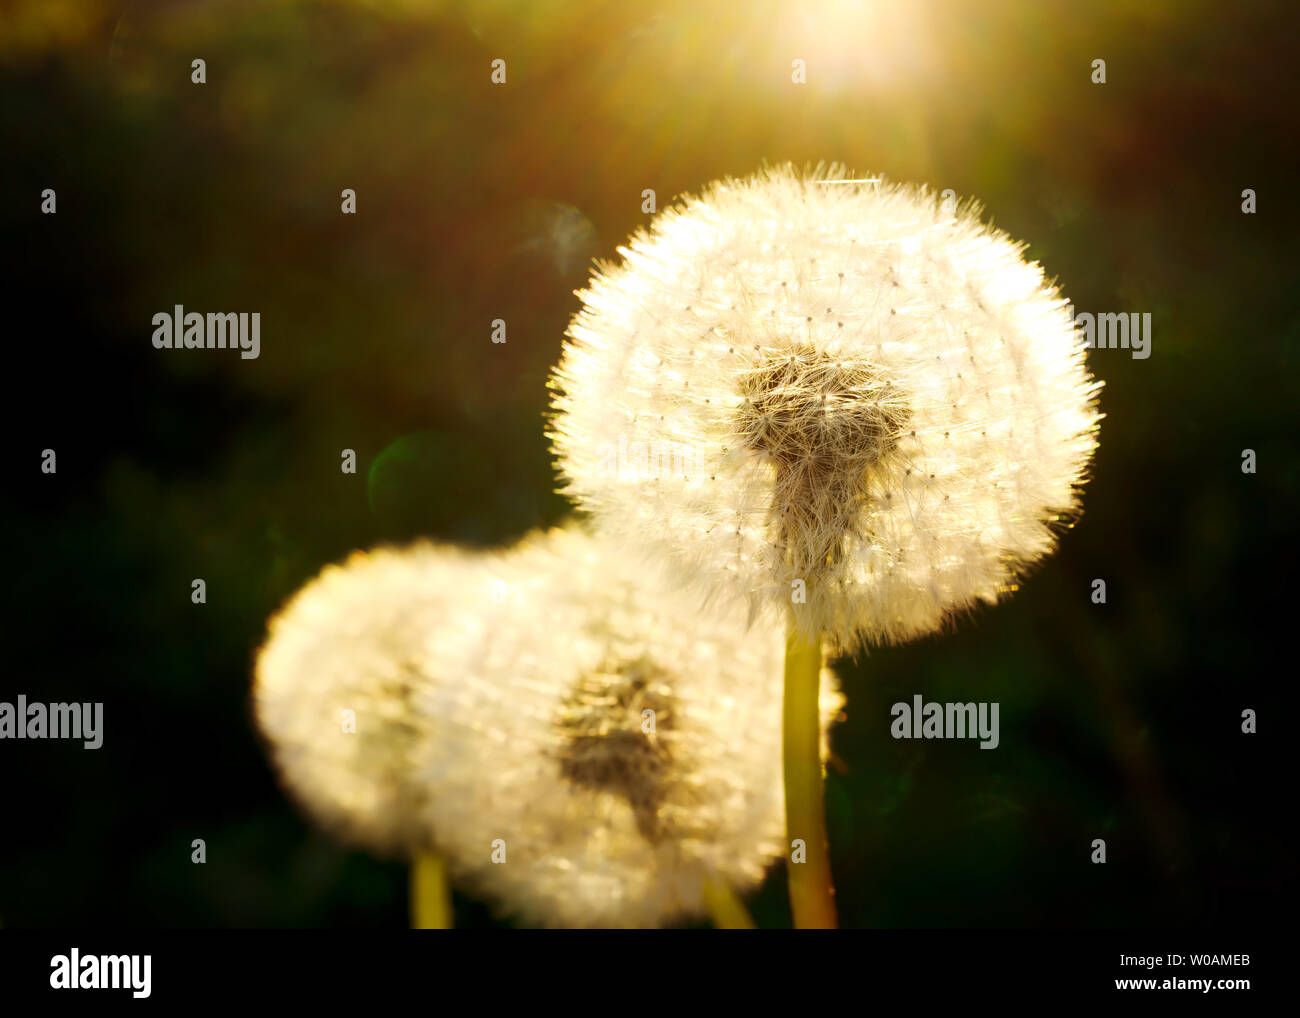 Sunlight shining through dandelion seed heads. Stock Photo